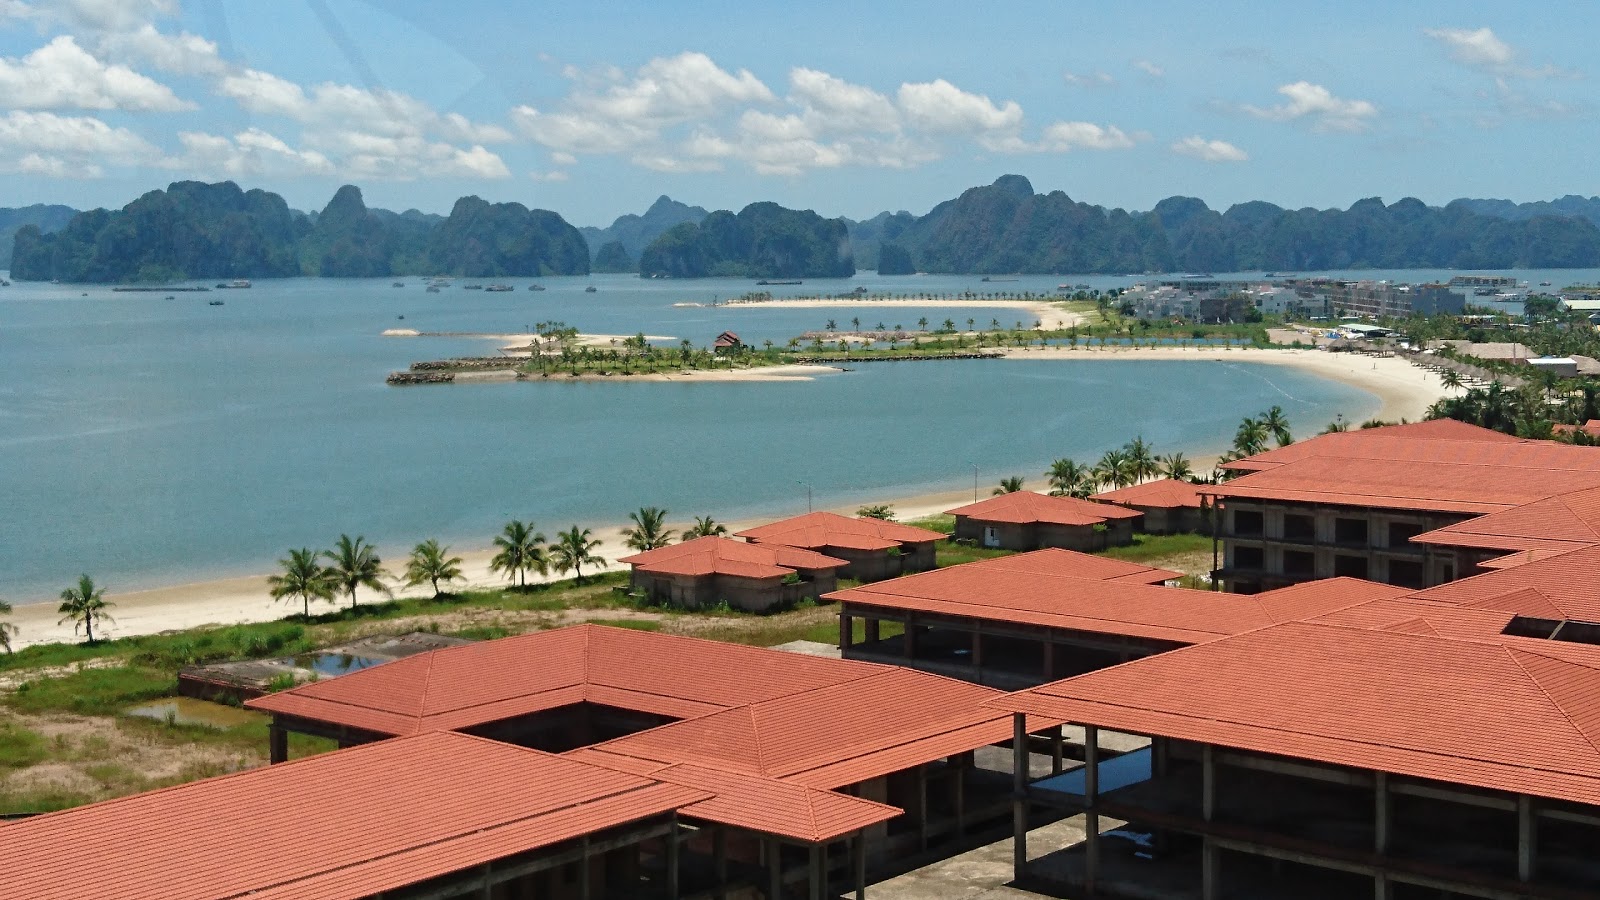 Photo of Tuan Chau Resort beach with long straight shore